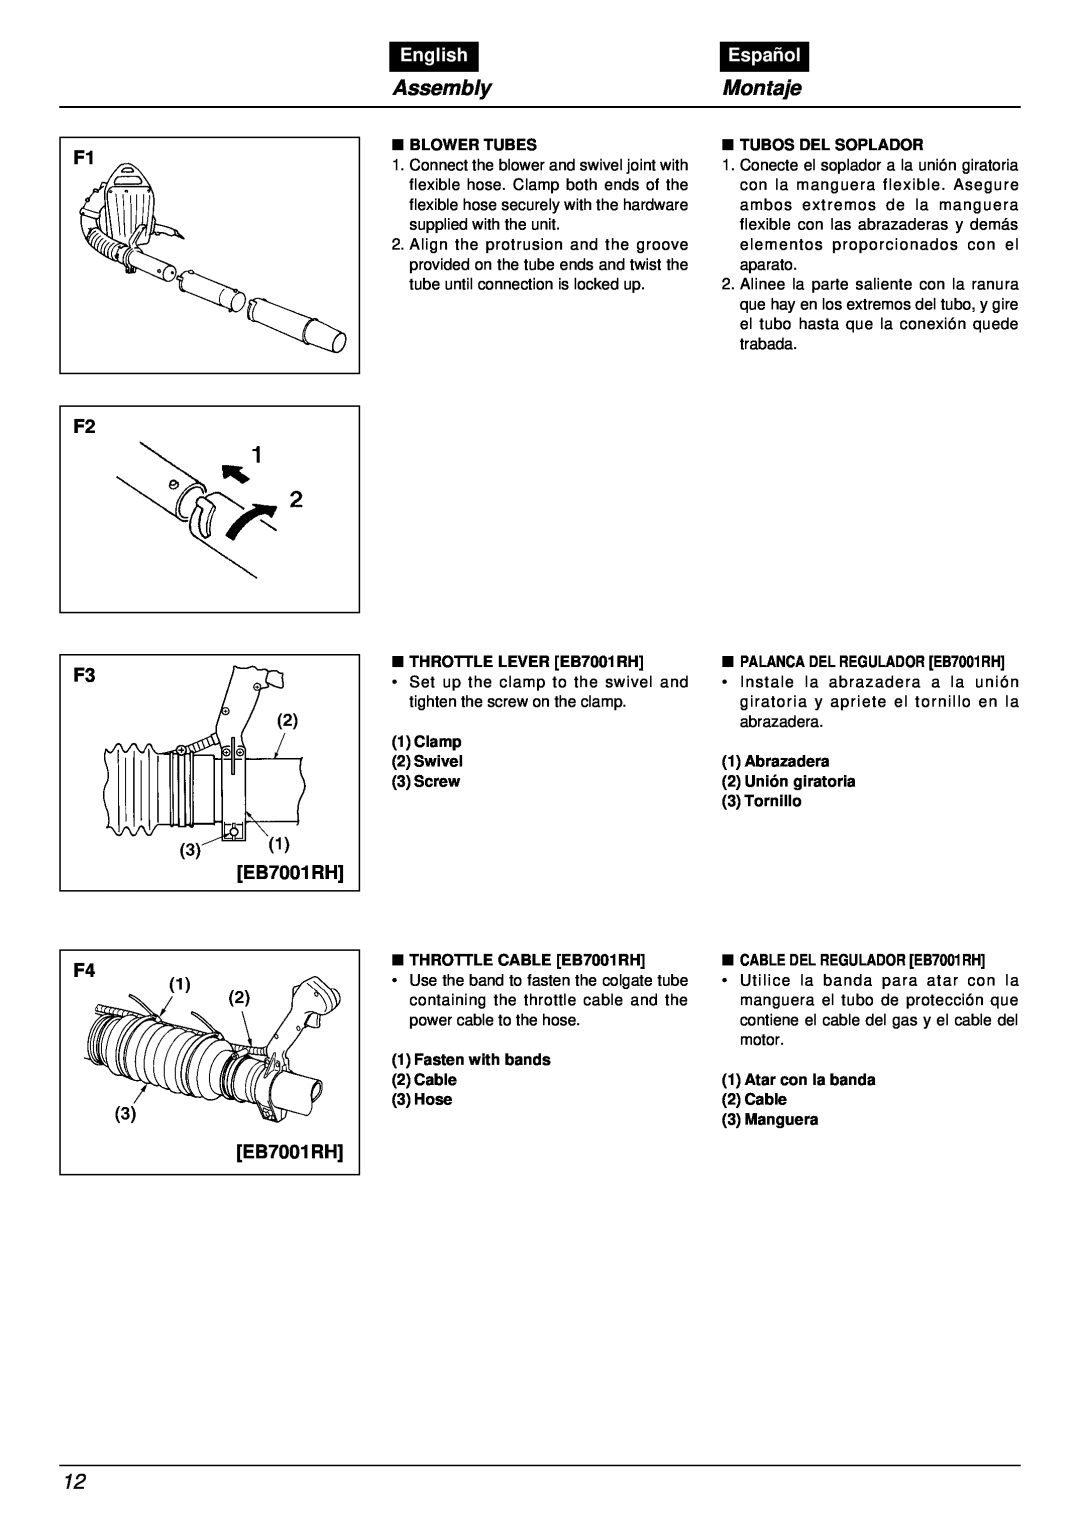 RedMax manual Assembly, Montaje, F3 EB7001RH F4 EB7001RH, English, Español 